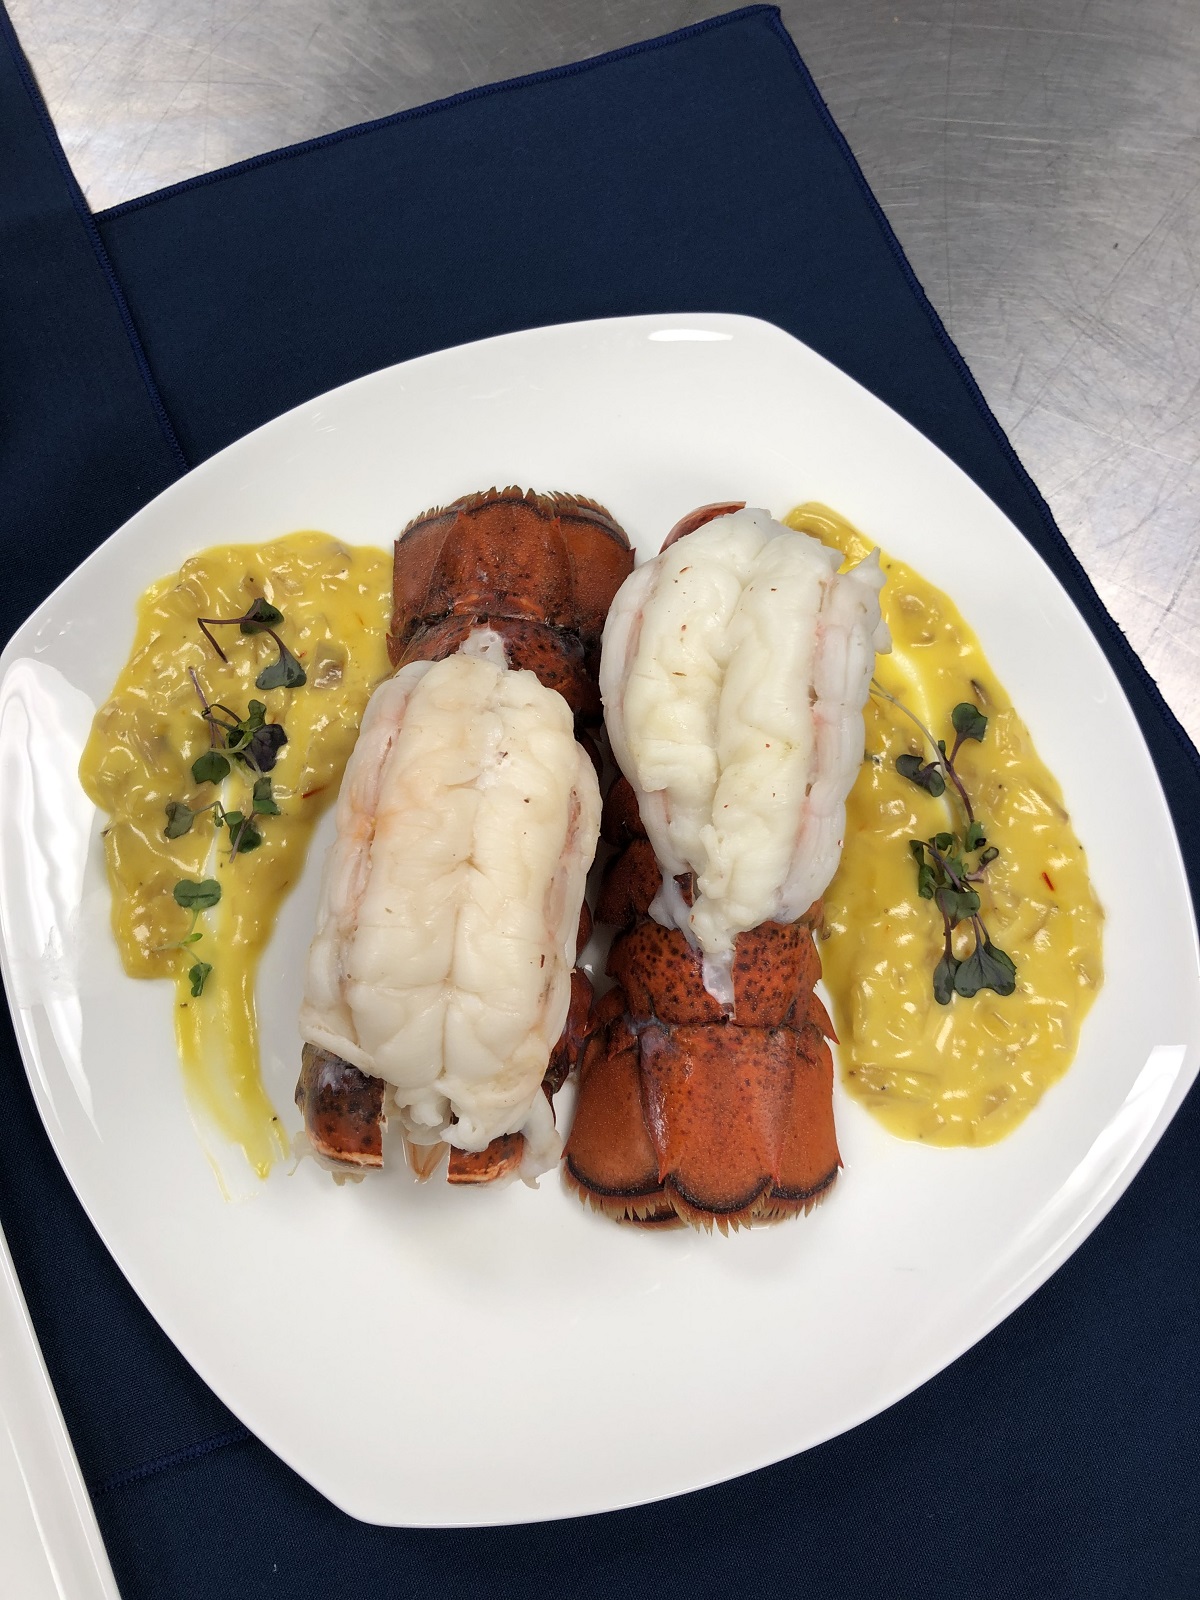 Lobster dinner at Lakewood